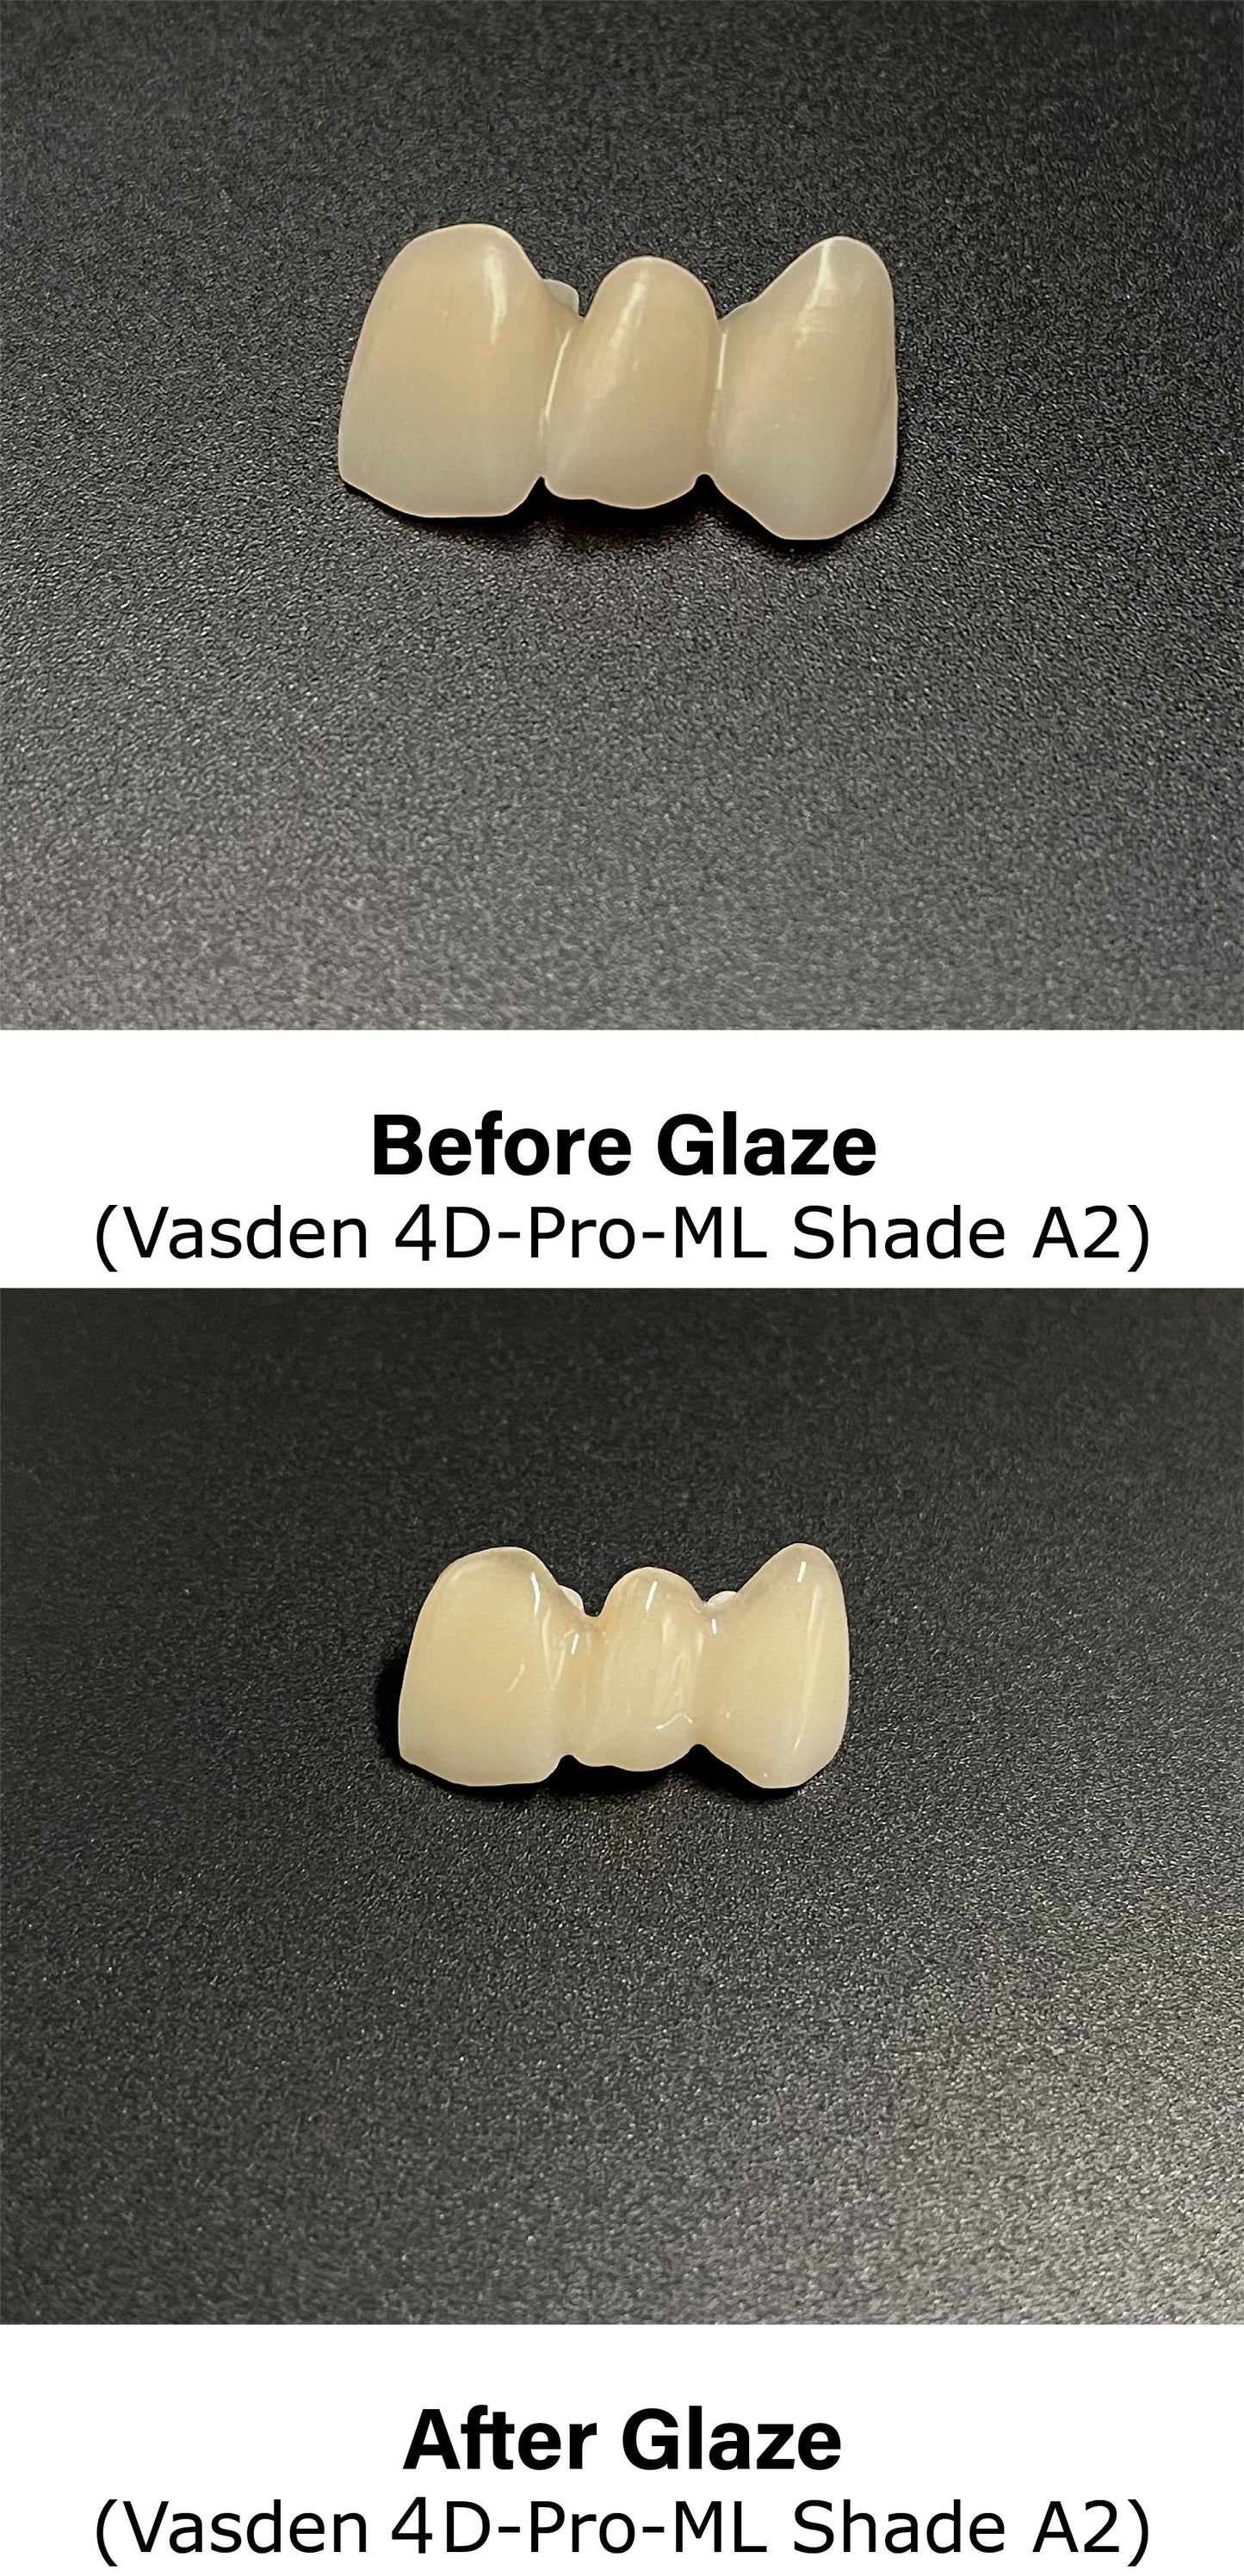 VASDEN Zirconia stain dental glaze liquid zirconia liquid dental stain & glaze paste for dental lab